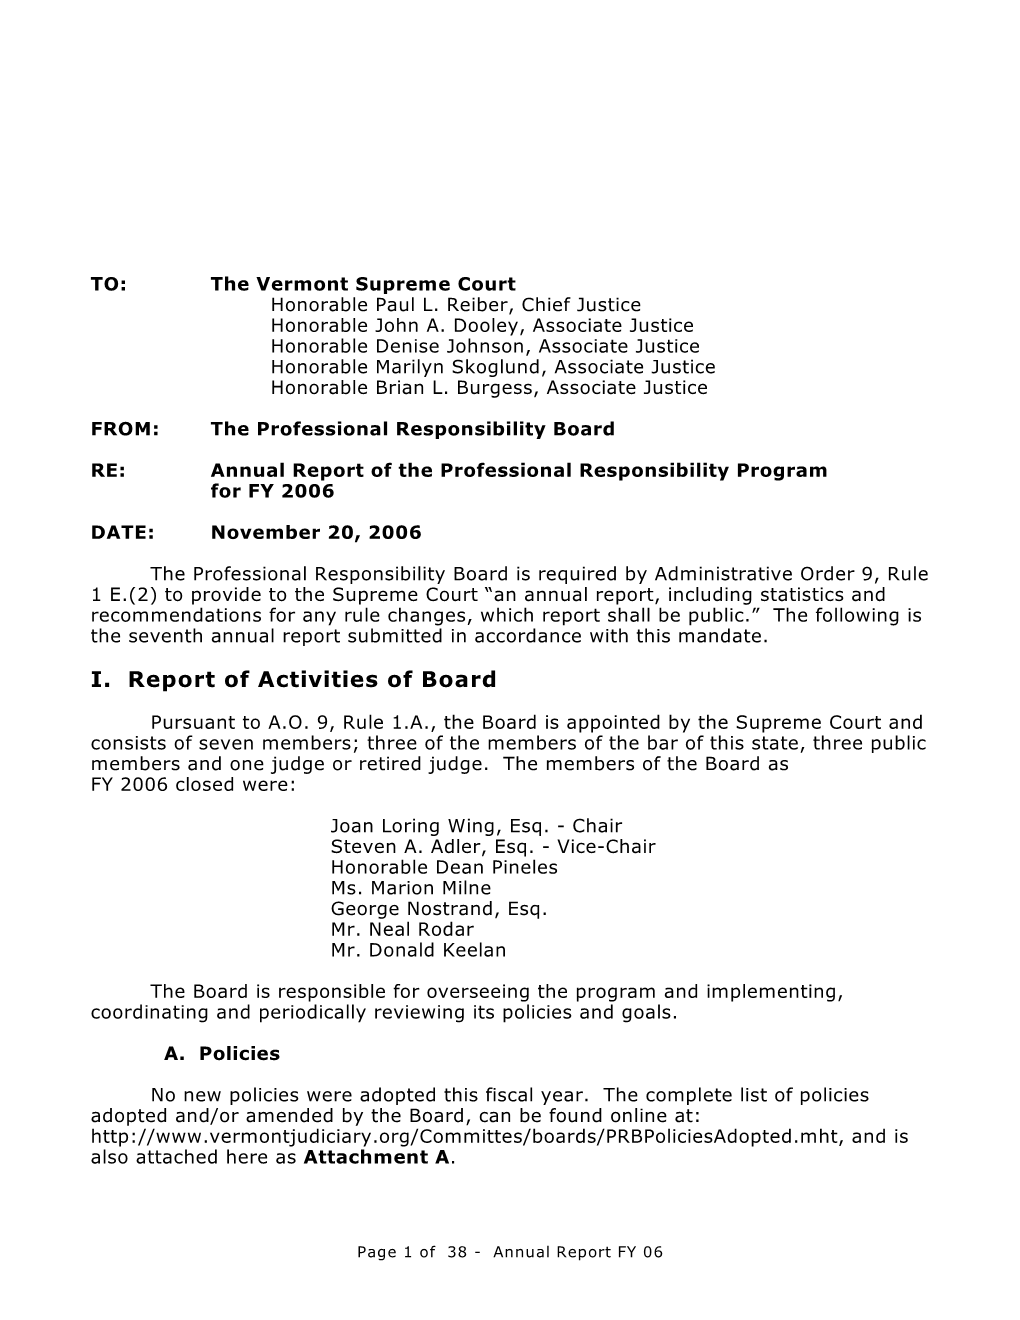 I. Report of Activities of Board